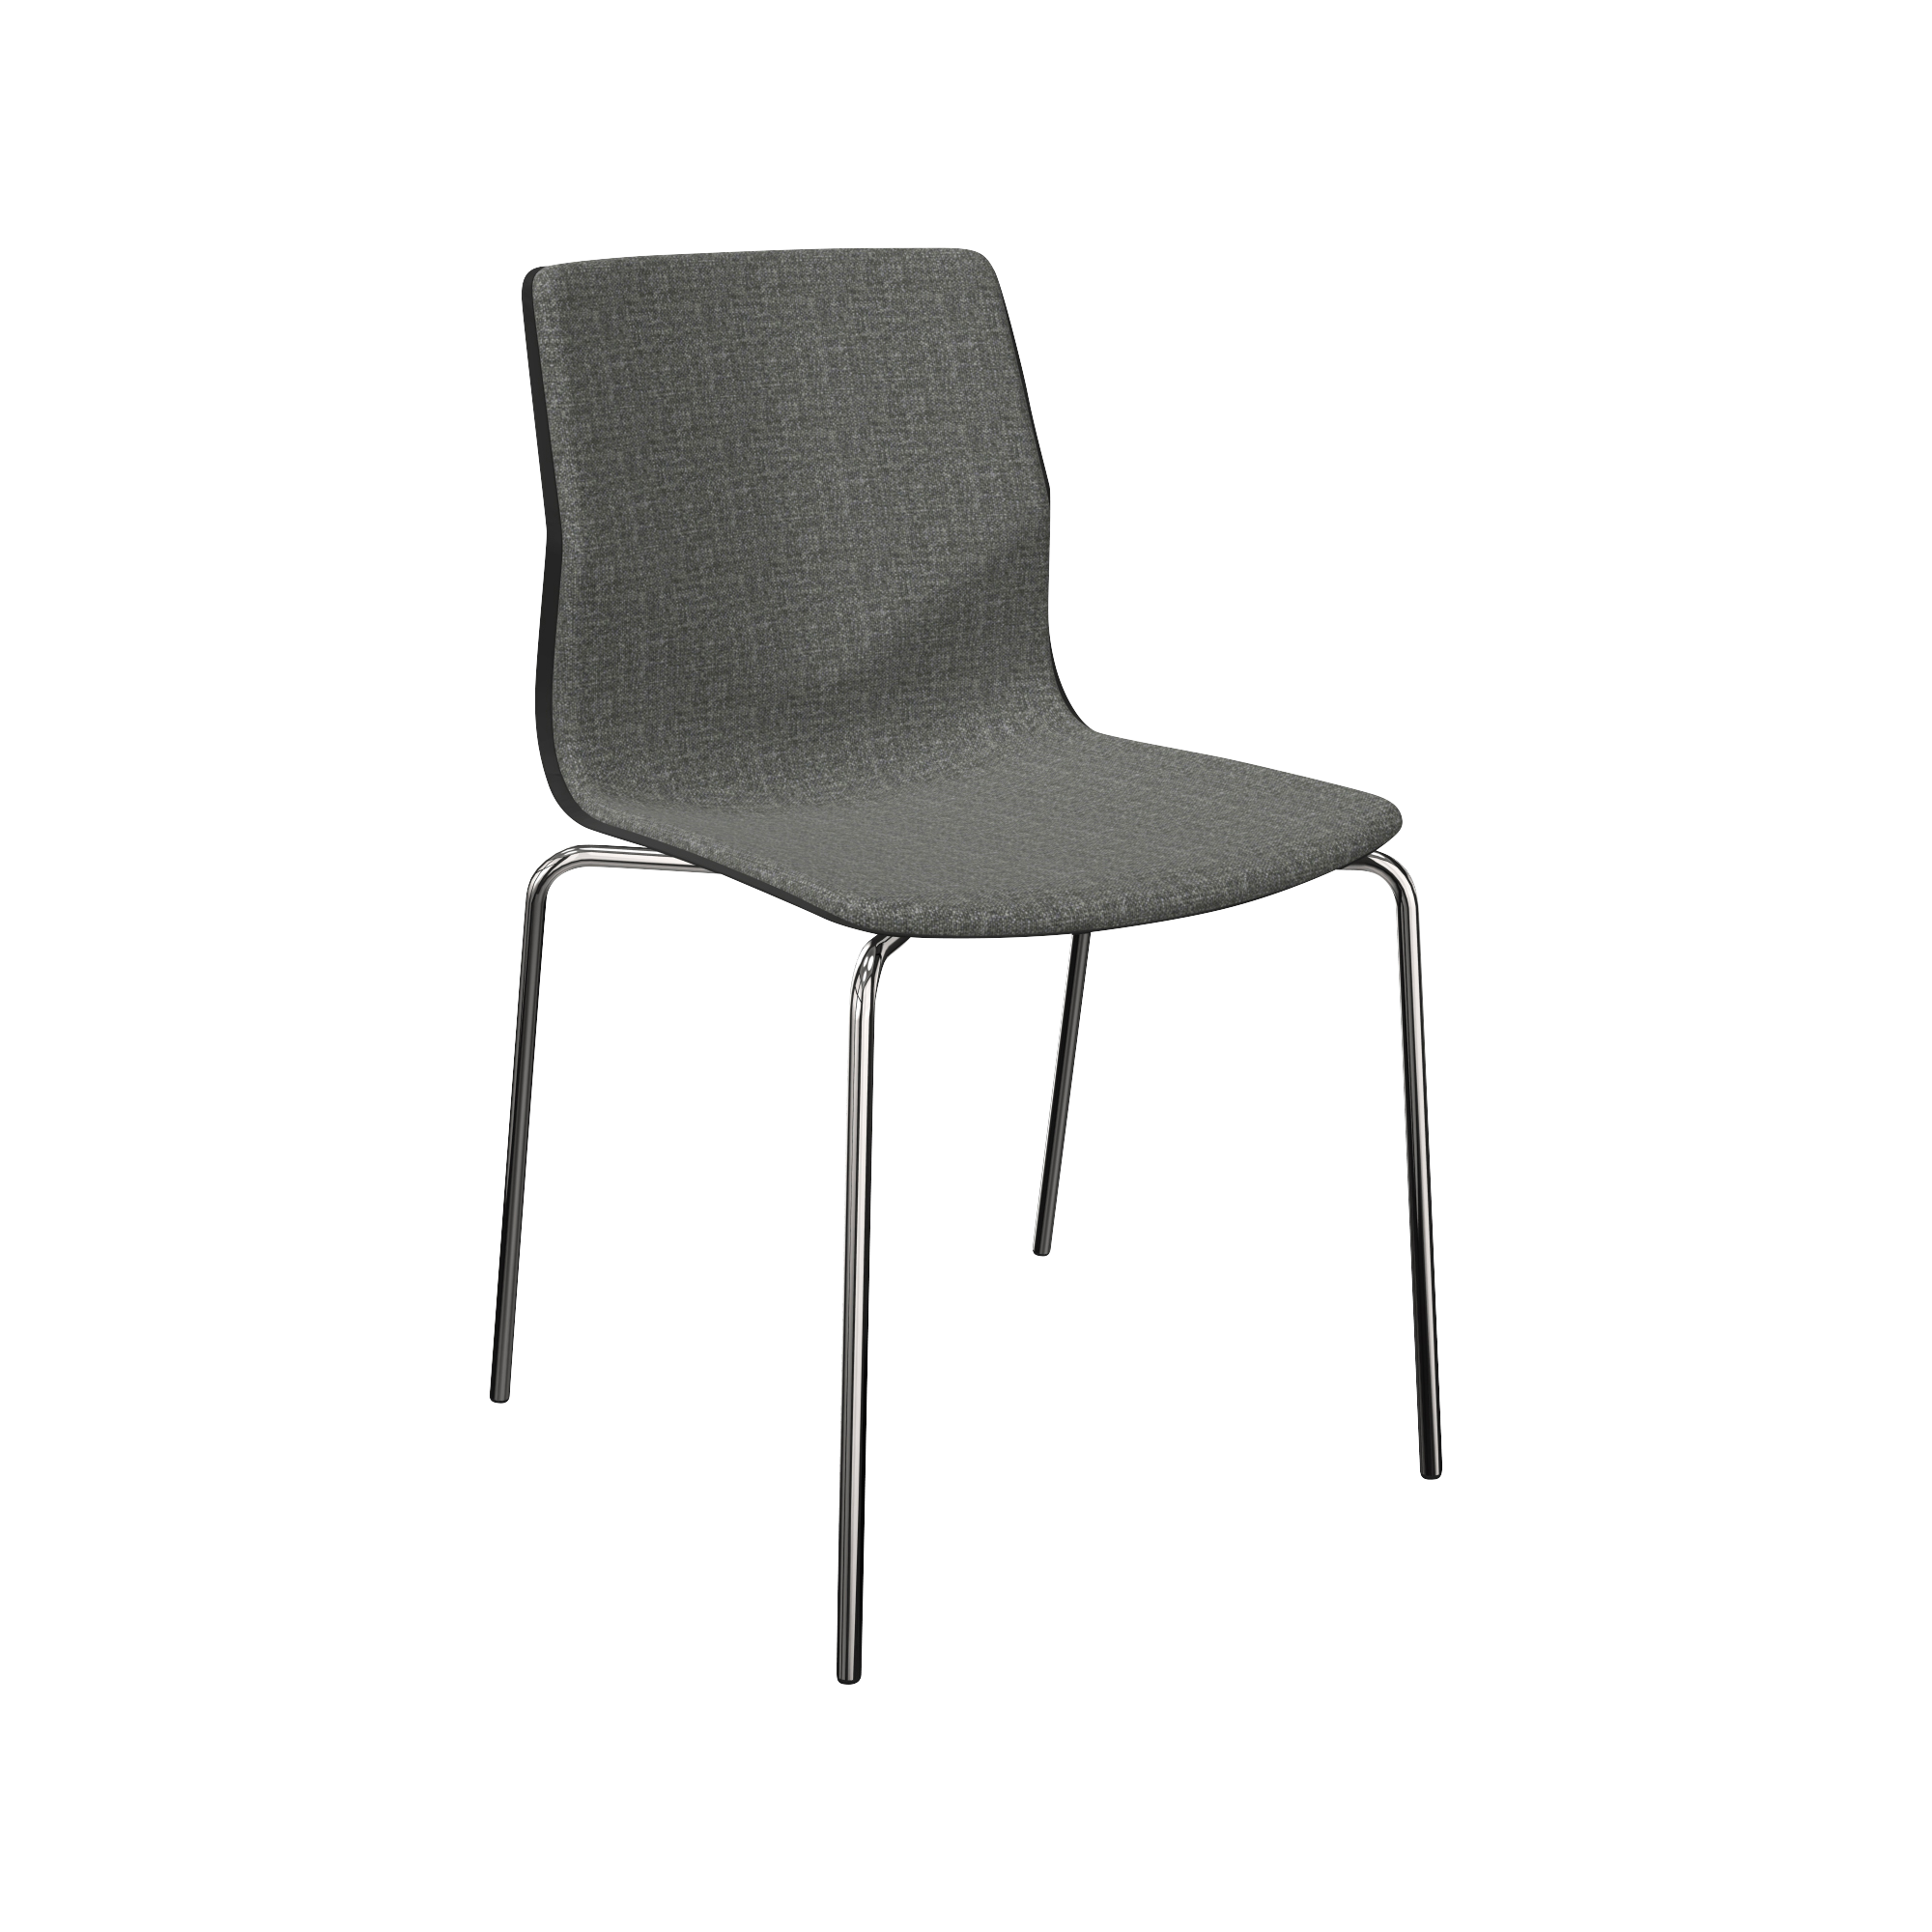 A grey chair with chrome legs